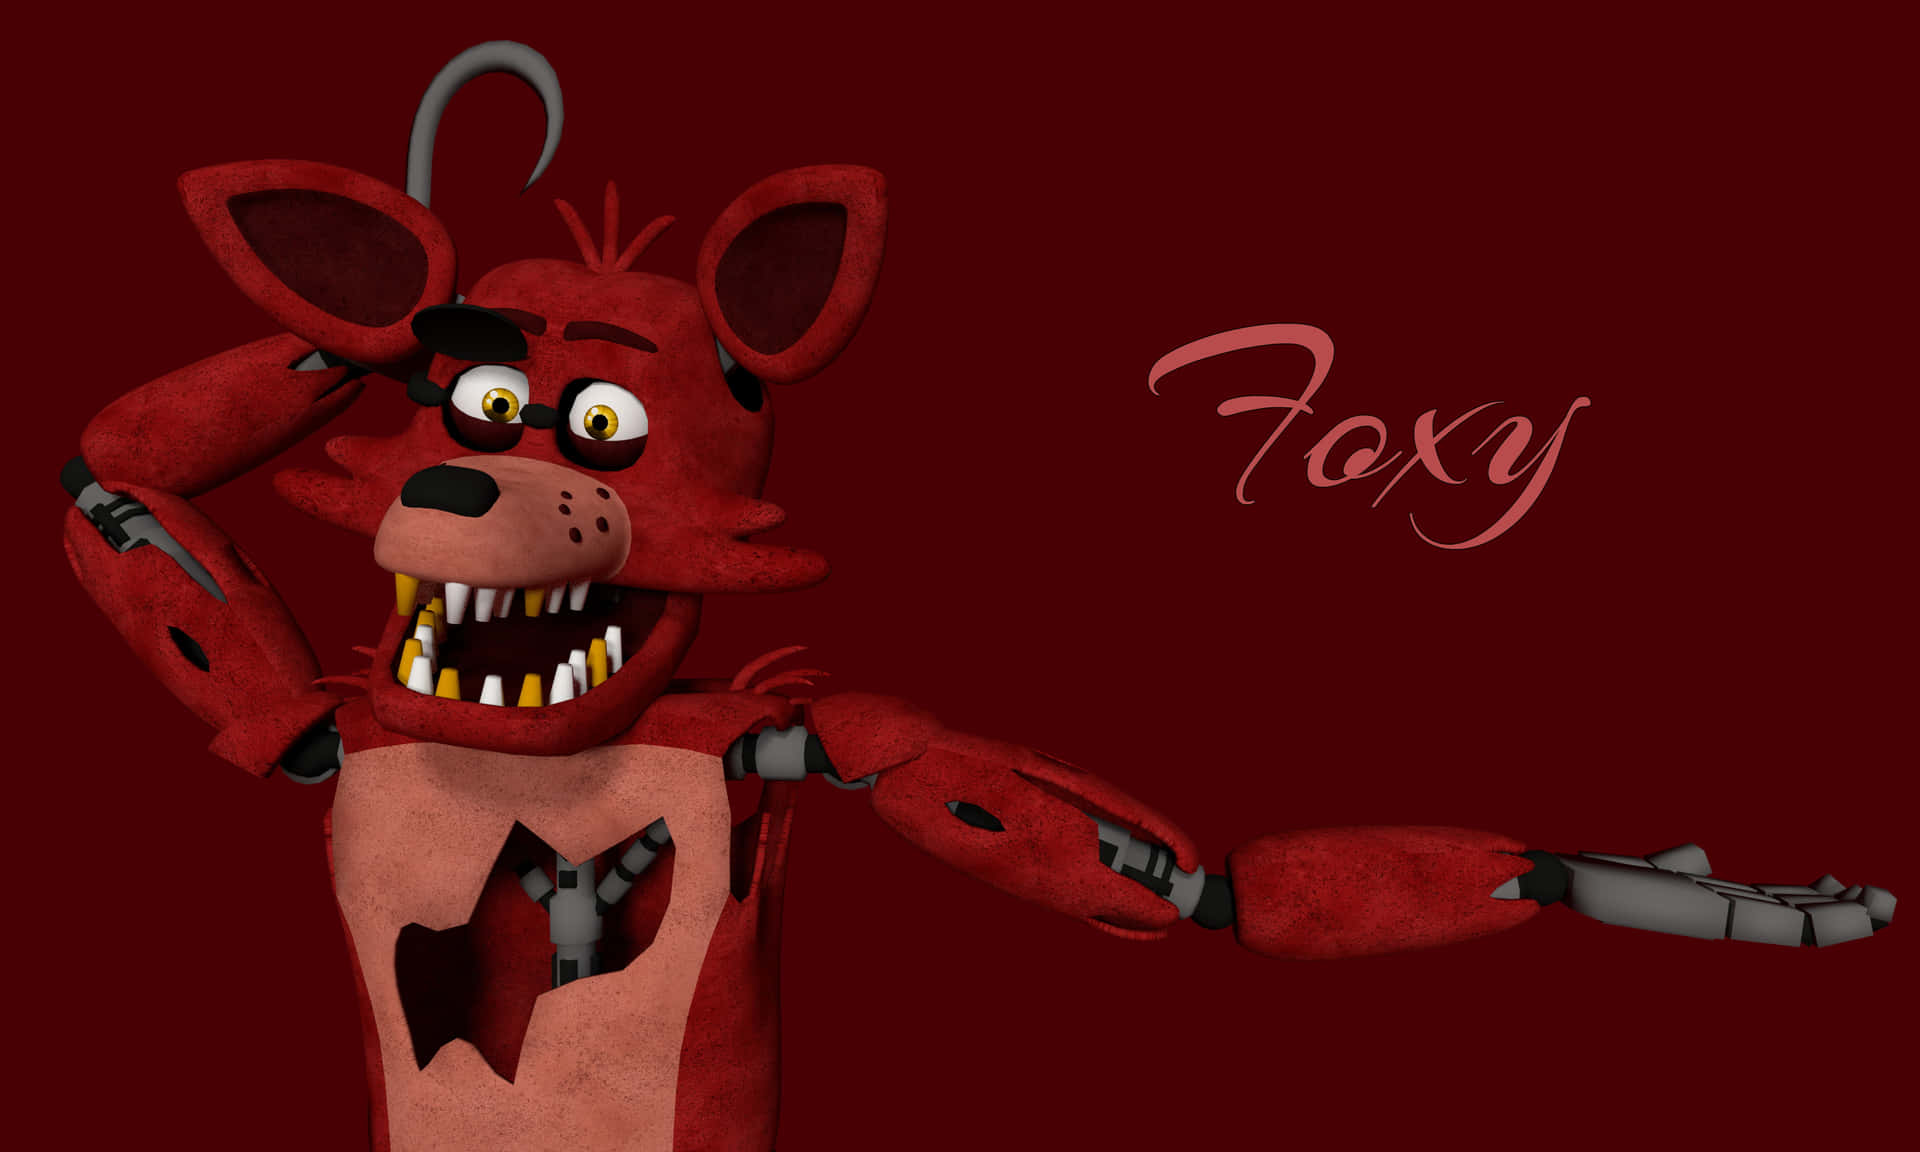 "Hello I'm Foxy!"